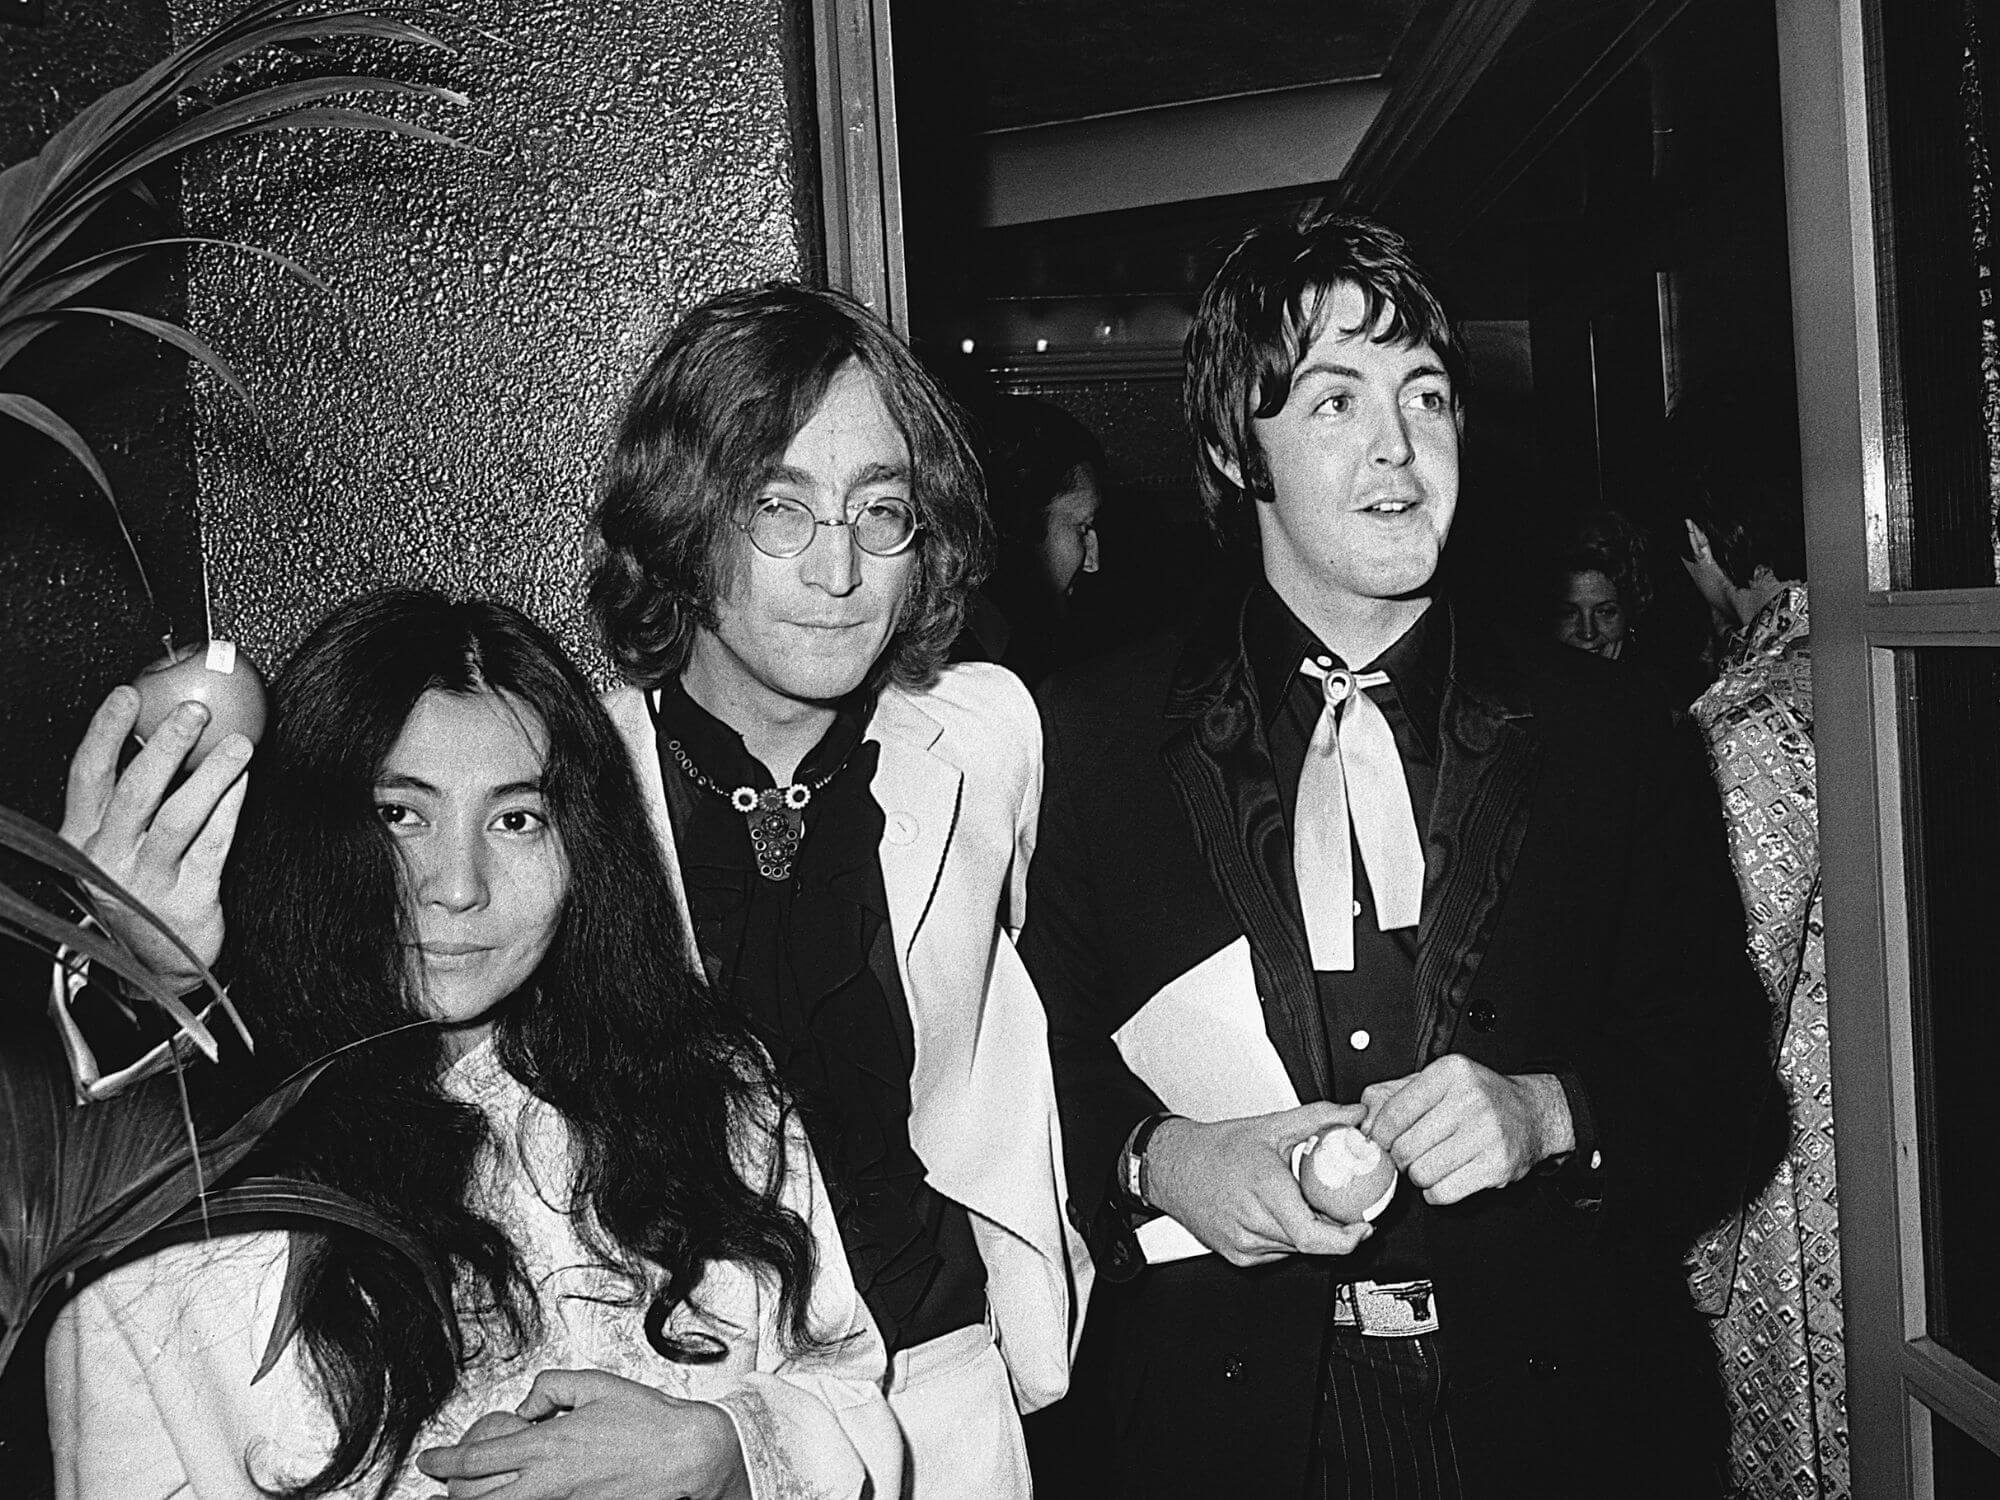 Yoko Ono with John Lennon and Paul McCartney in 1968